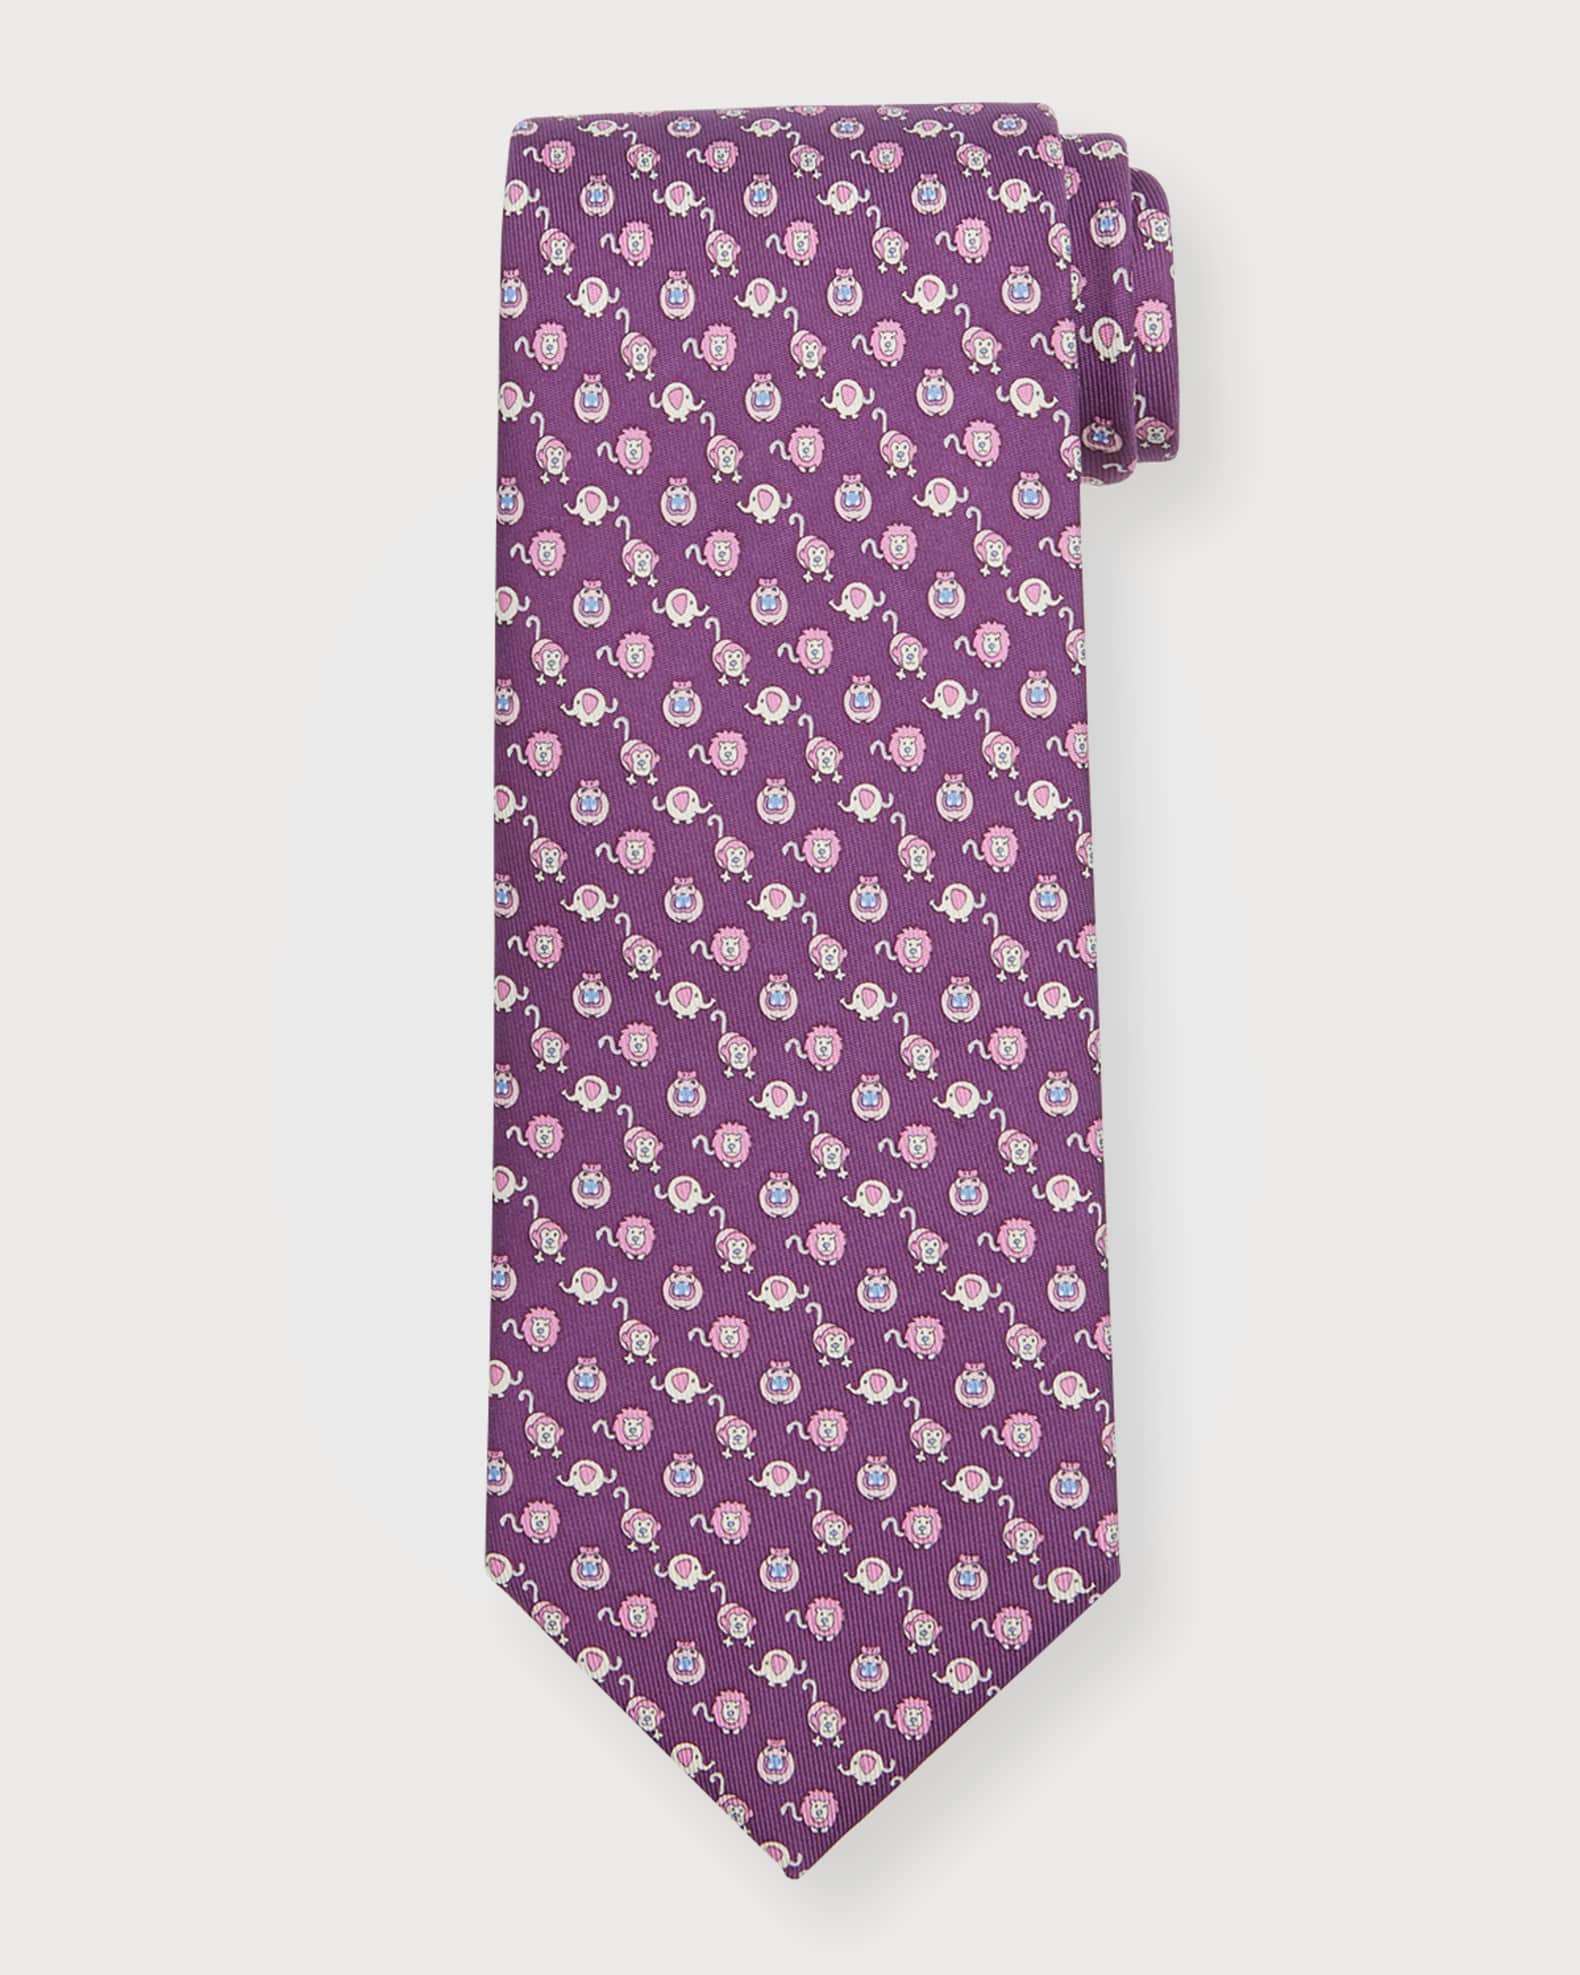 Ferragamo Men's 4-Pippo Animal Print Silk Tie | Neiman Marcus